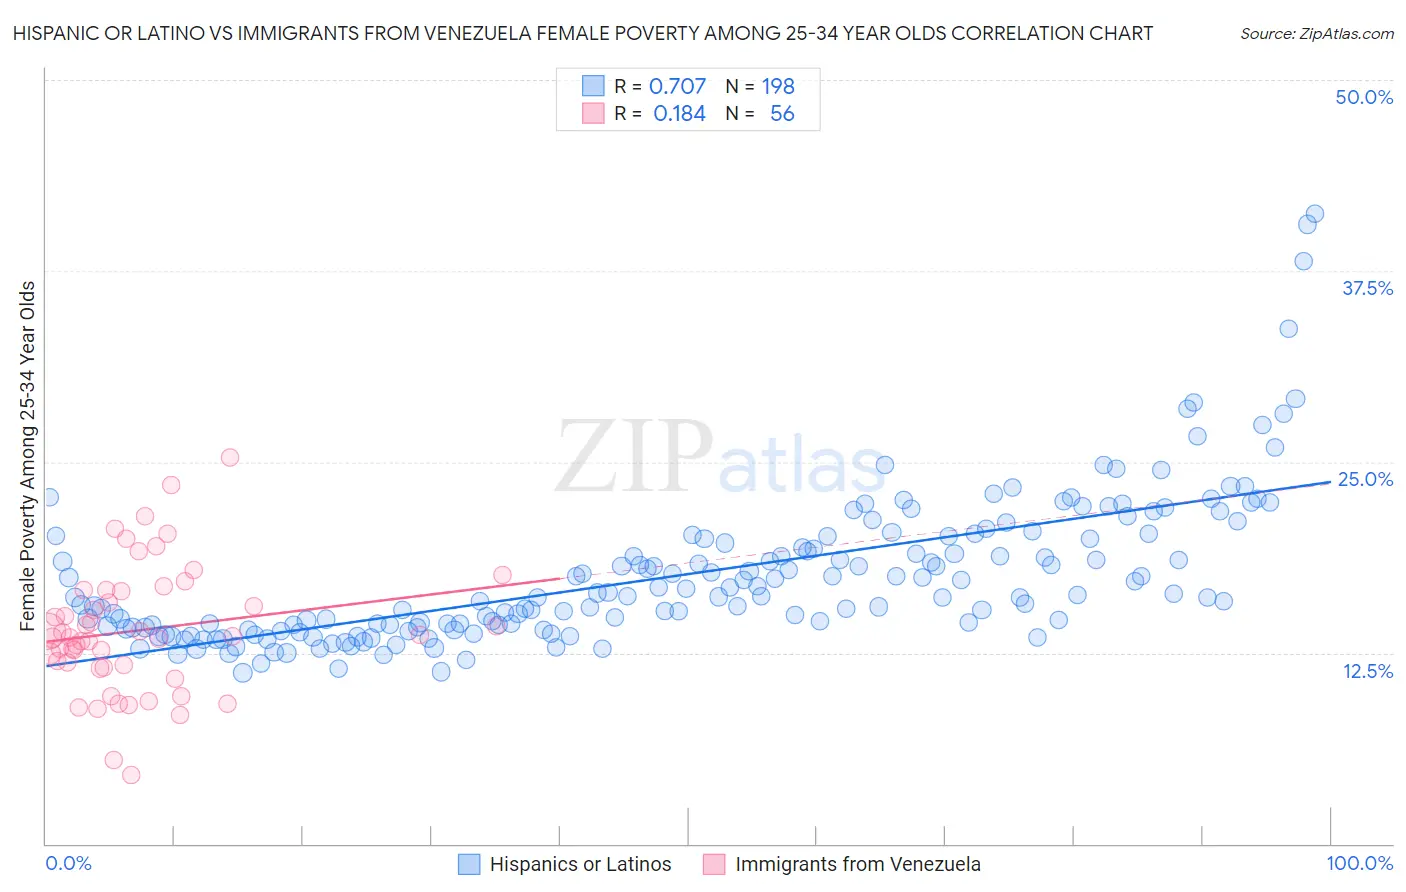 Hispanic or Latino vs Immigrants from Venezuela Female Poverty Among 25-34 Year Olds